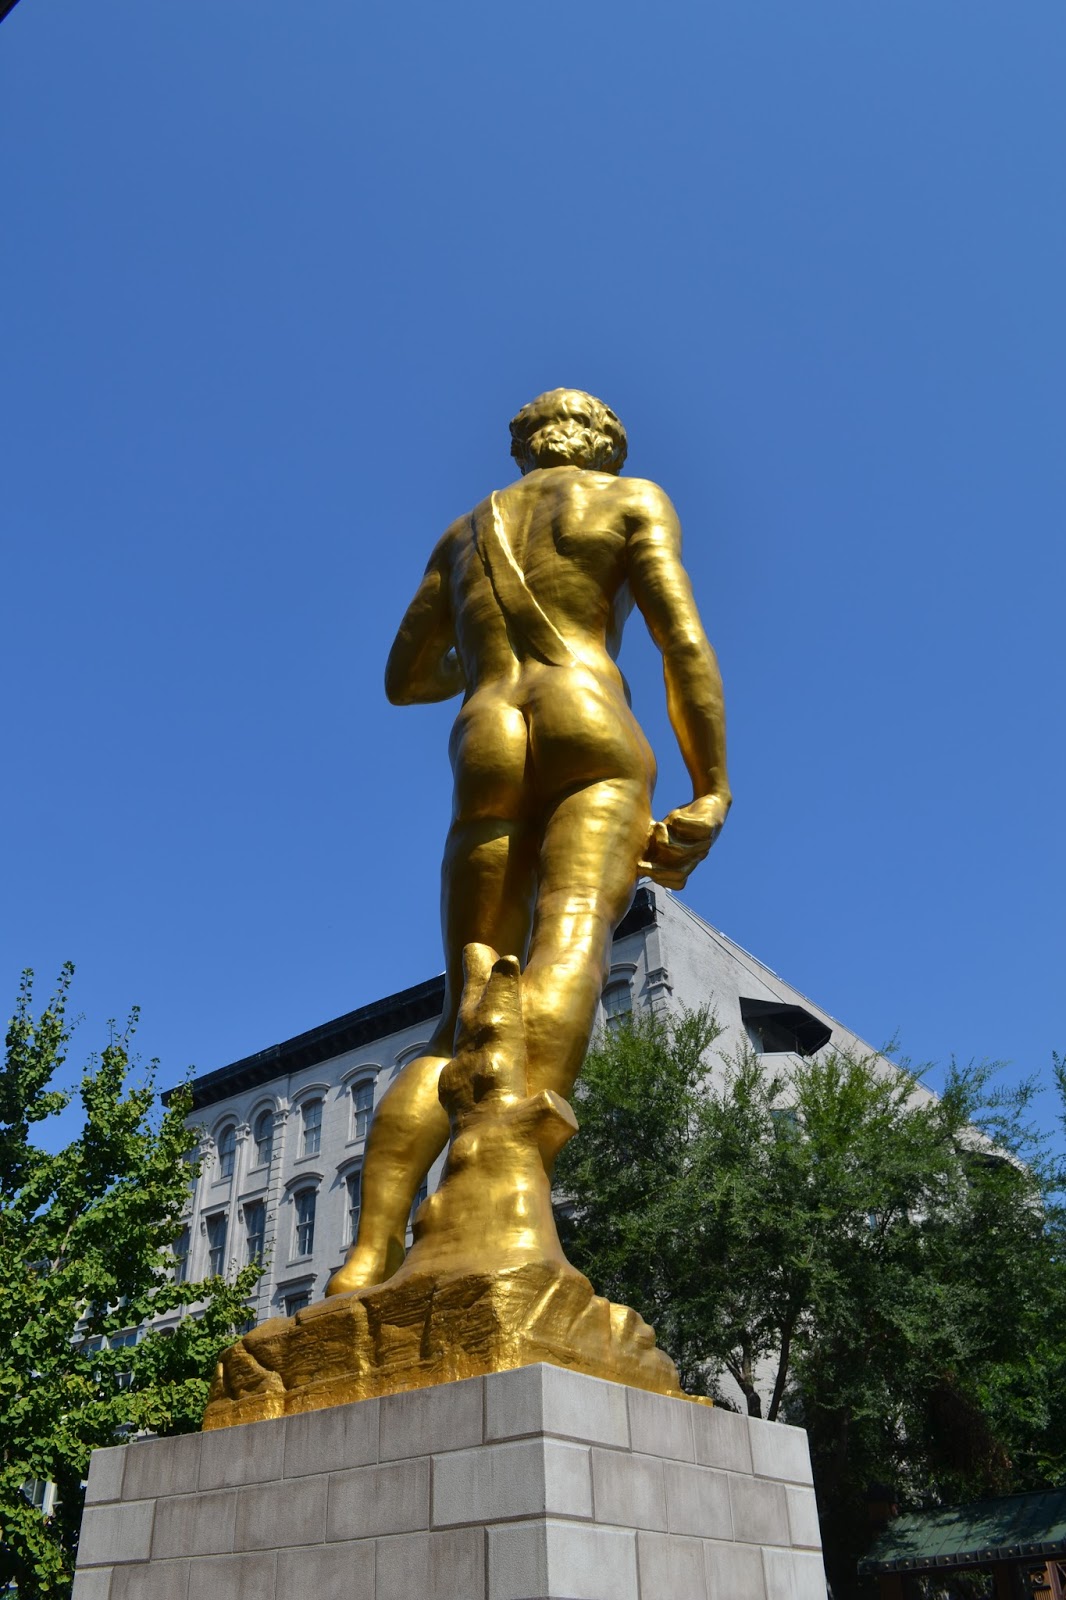 Travelin' Man: Gold Statue of David